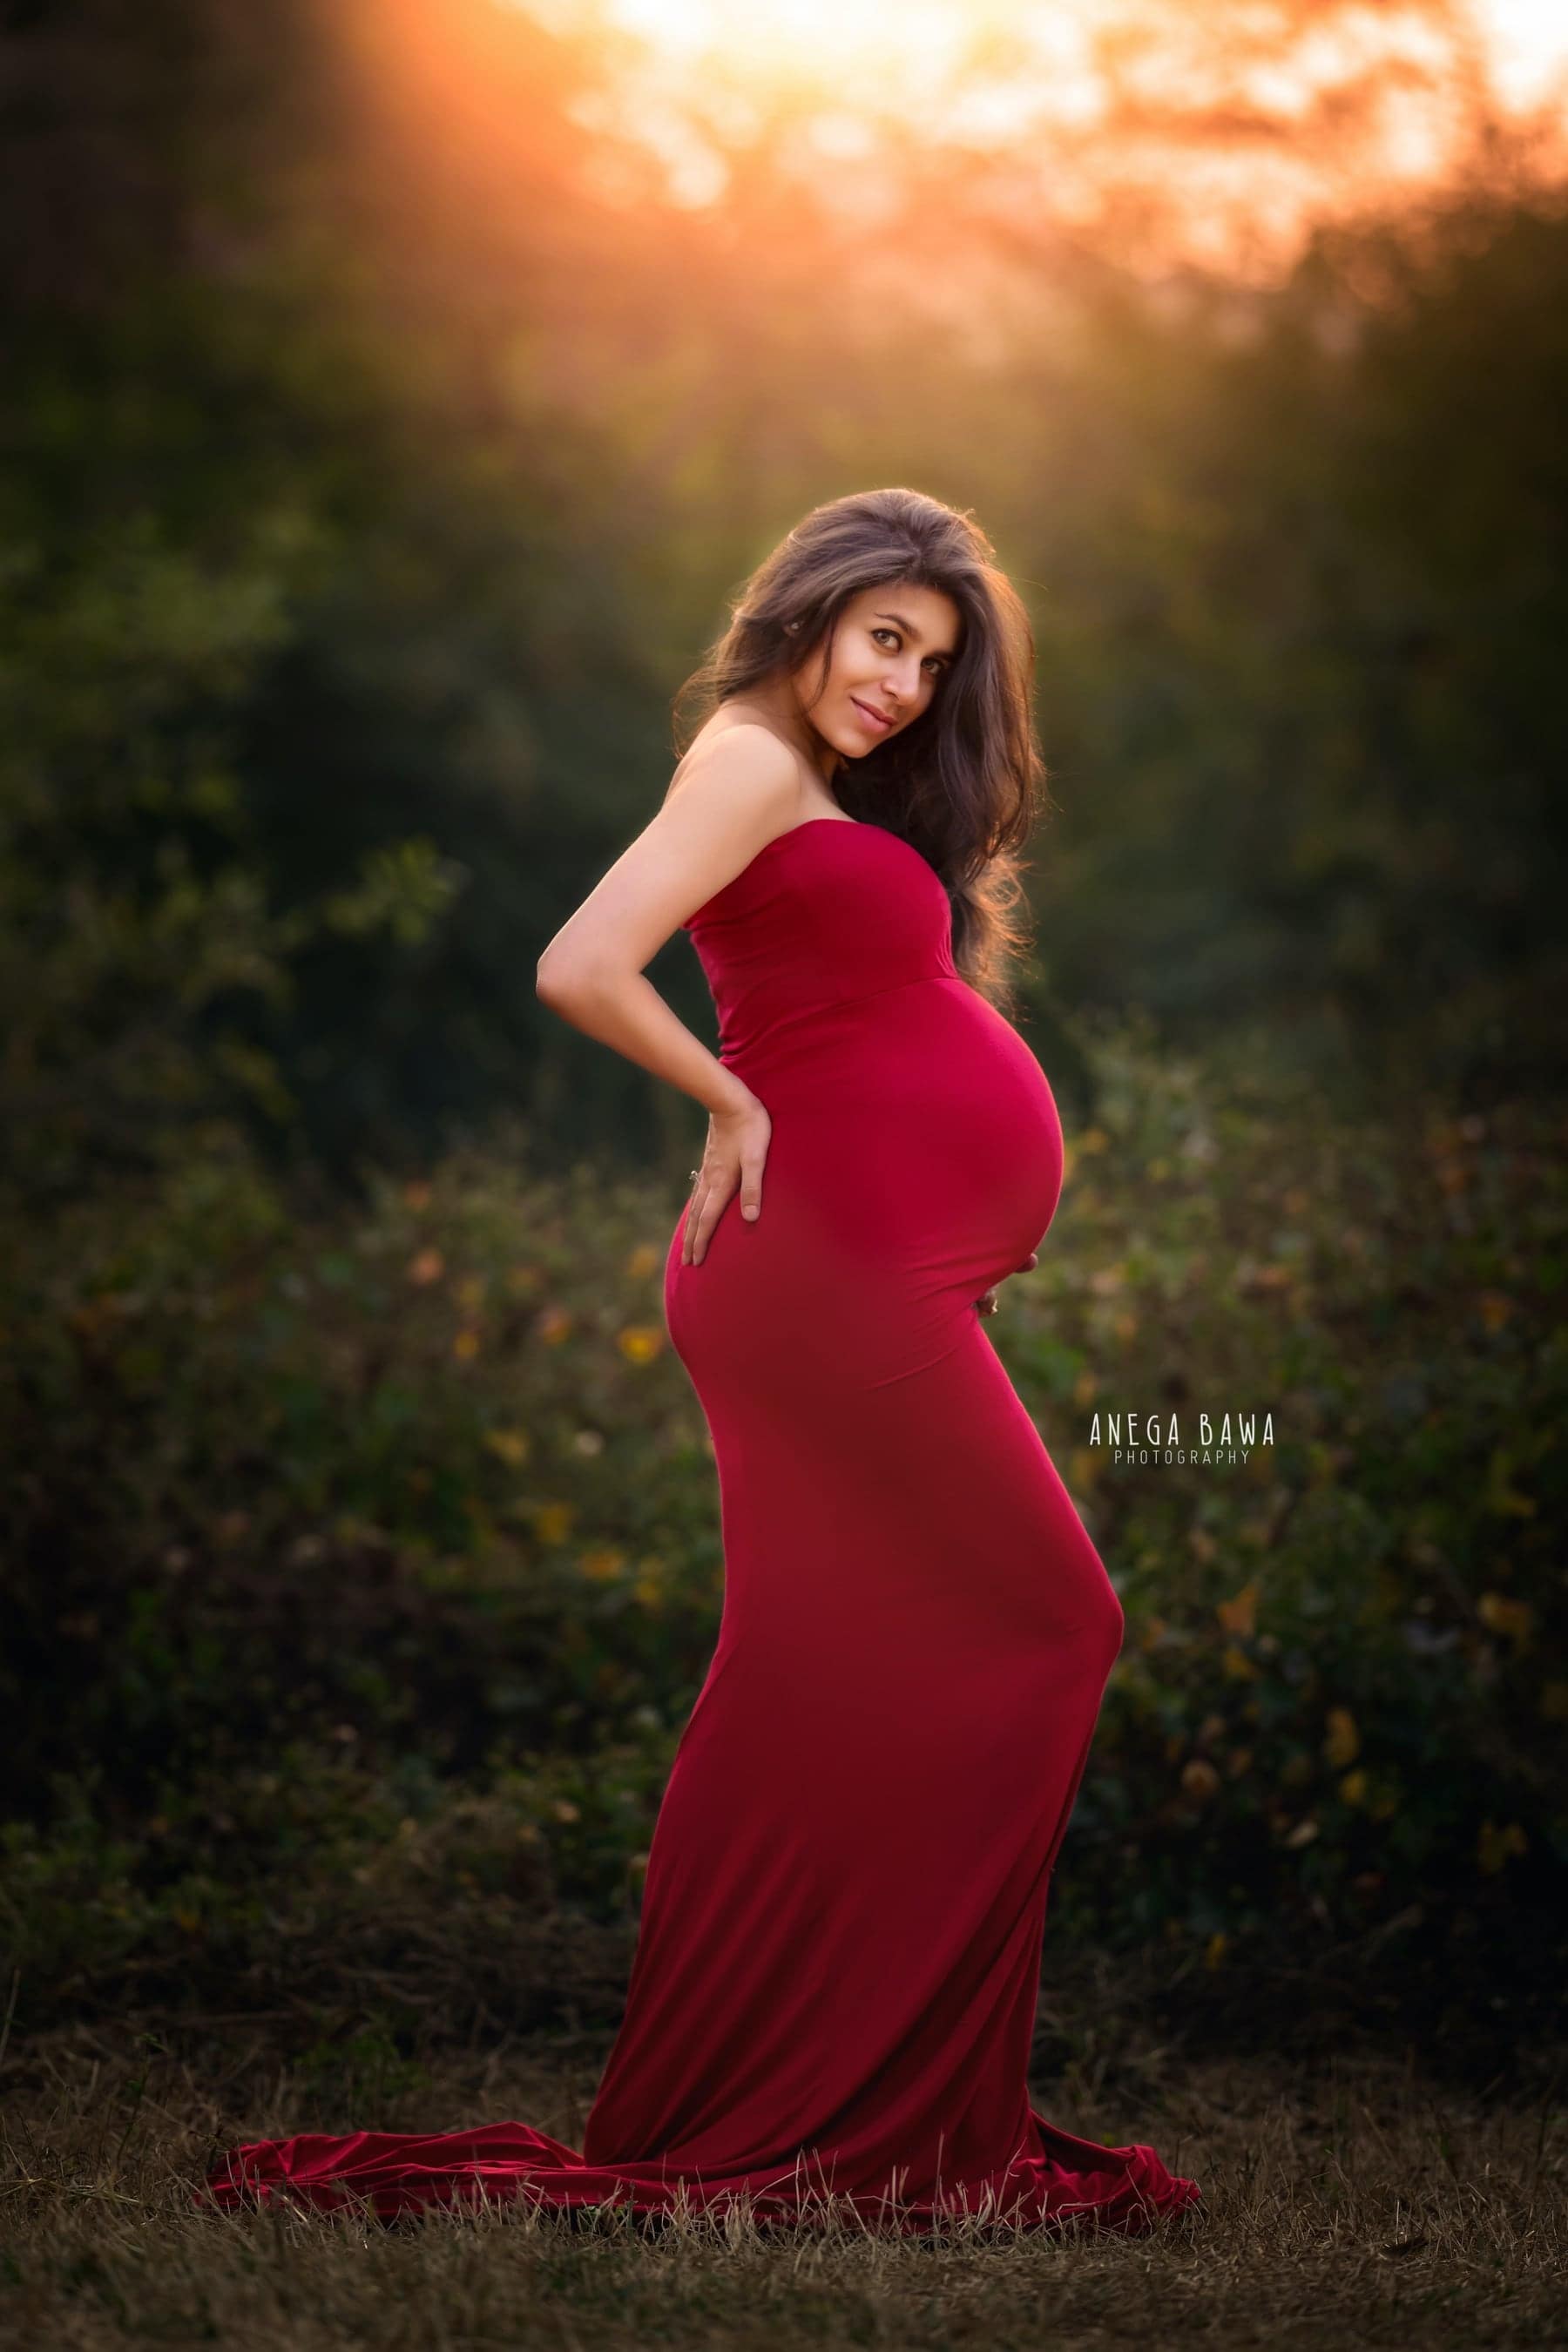 Outdoor Maternity Photoshoot Near Me - Photography Subjects